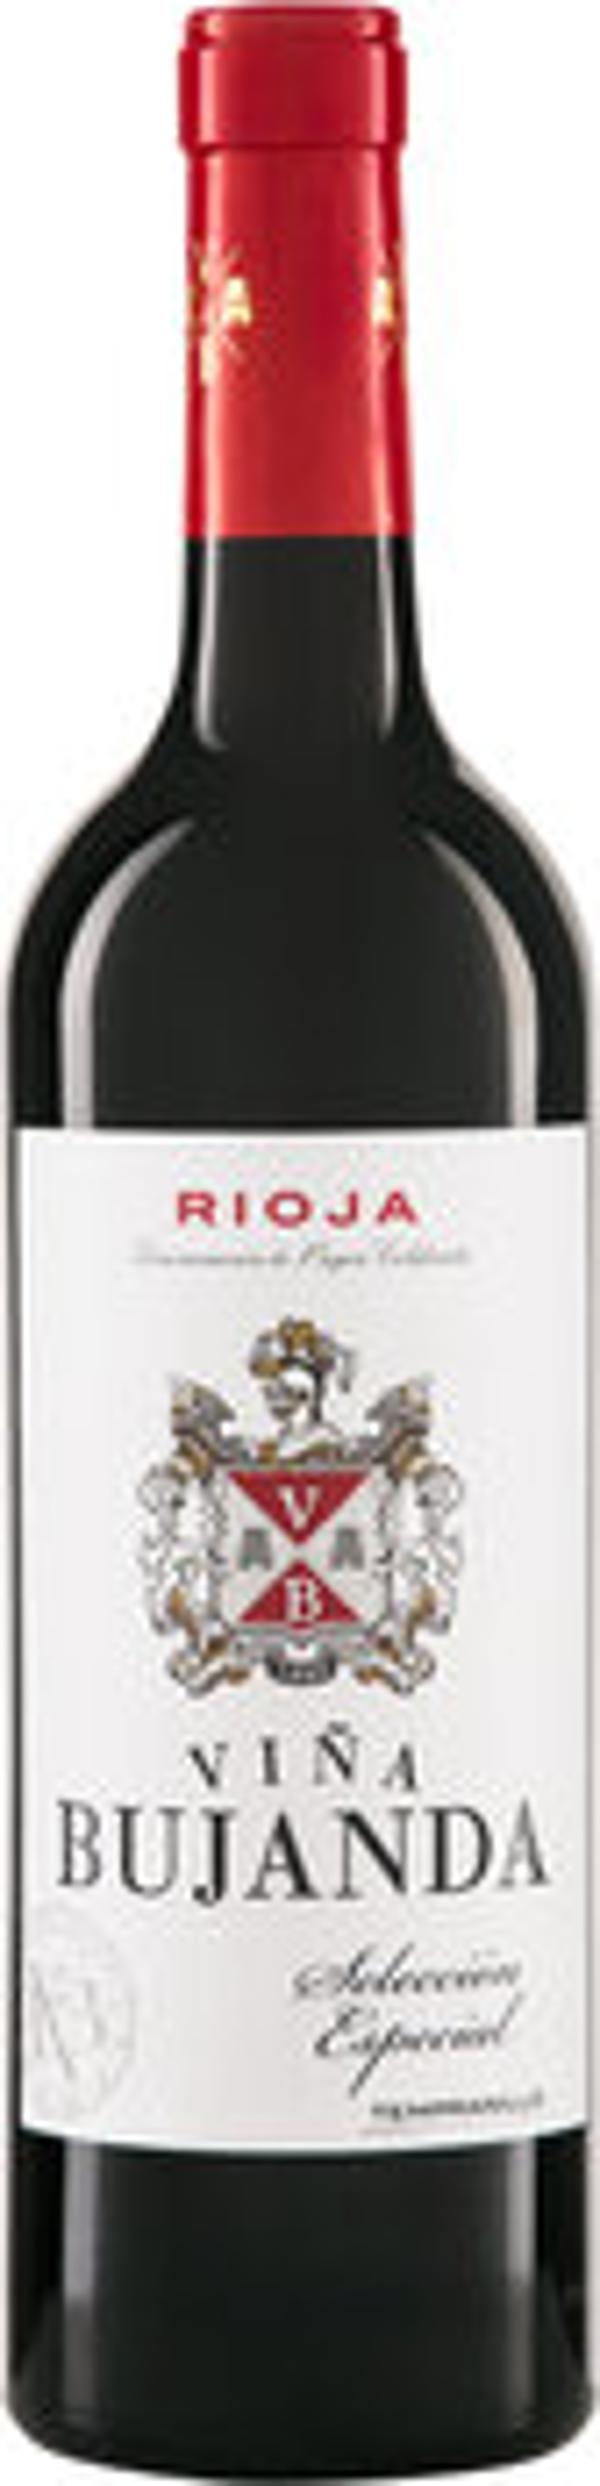 Produktfoto zu VIÑA BUJANDA Tempranillo Rioja D.O.Ca.